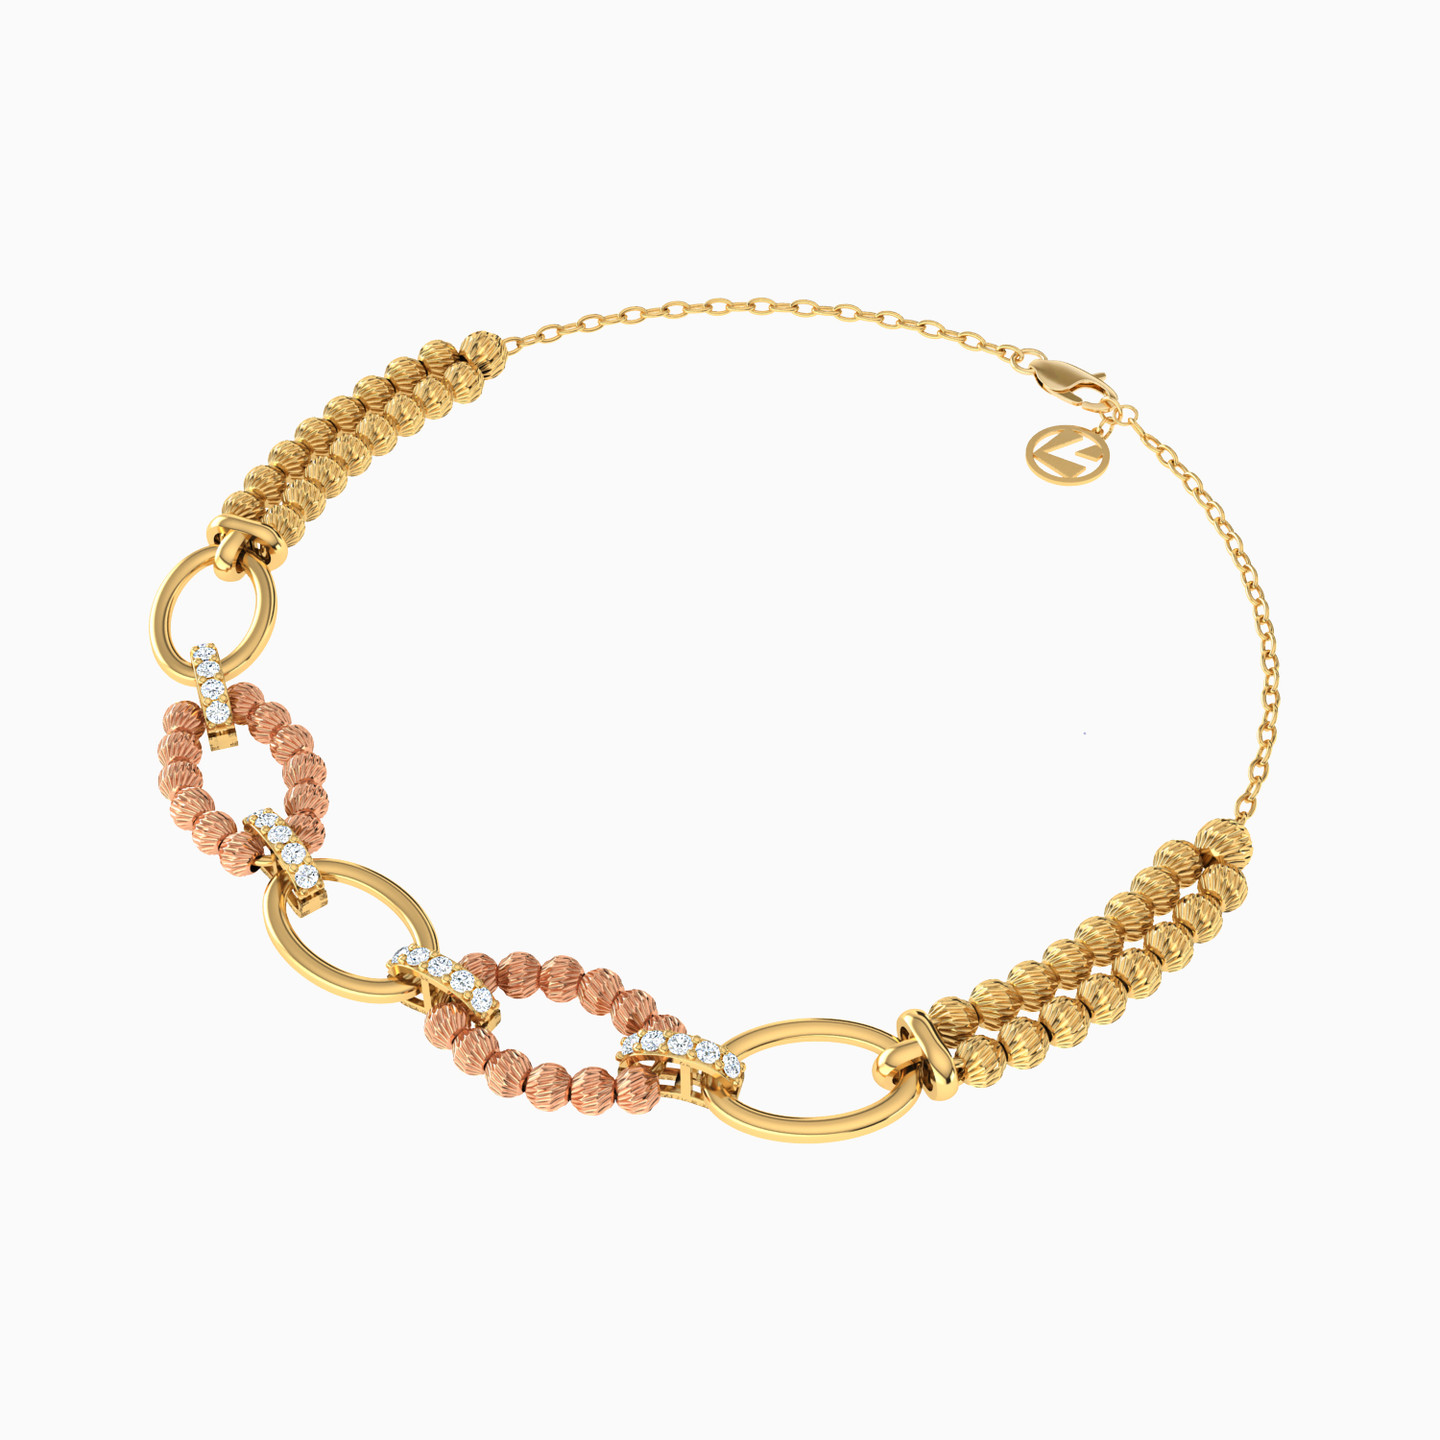 21K Gold Cubic Zirconia Chain Bracelet - 2